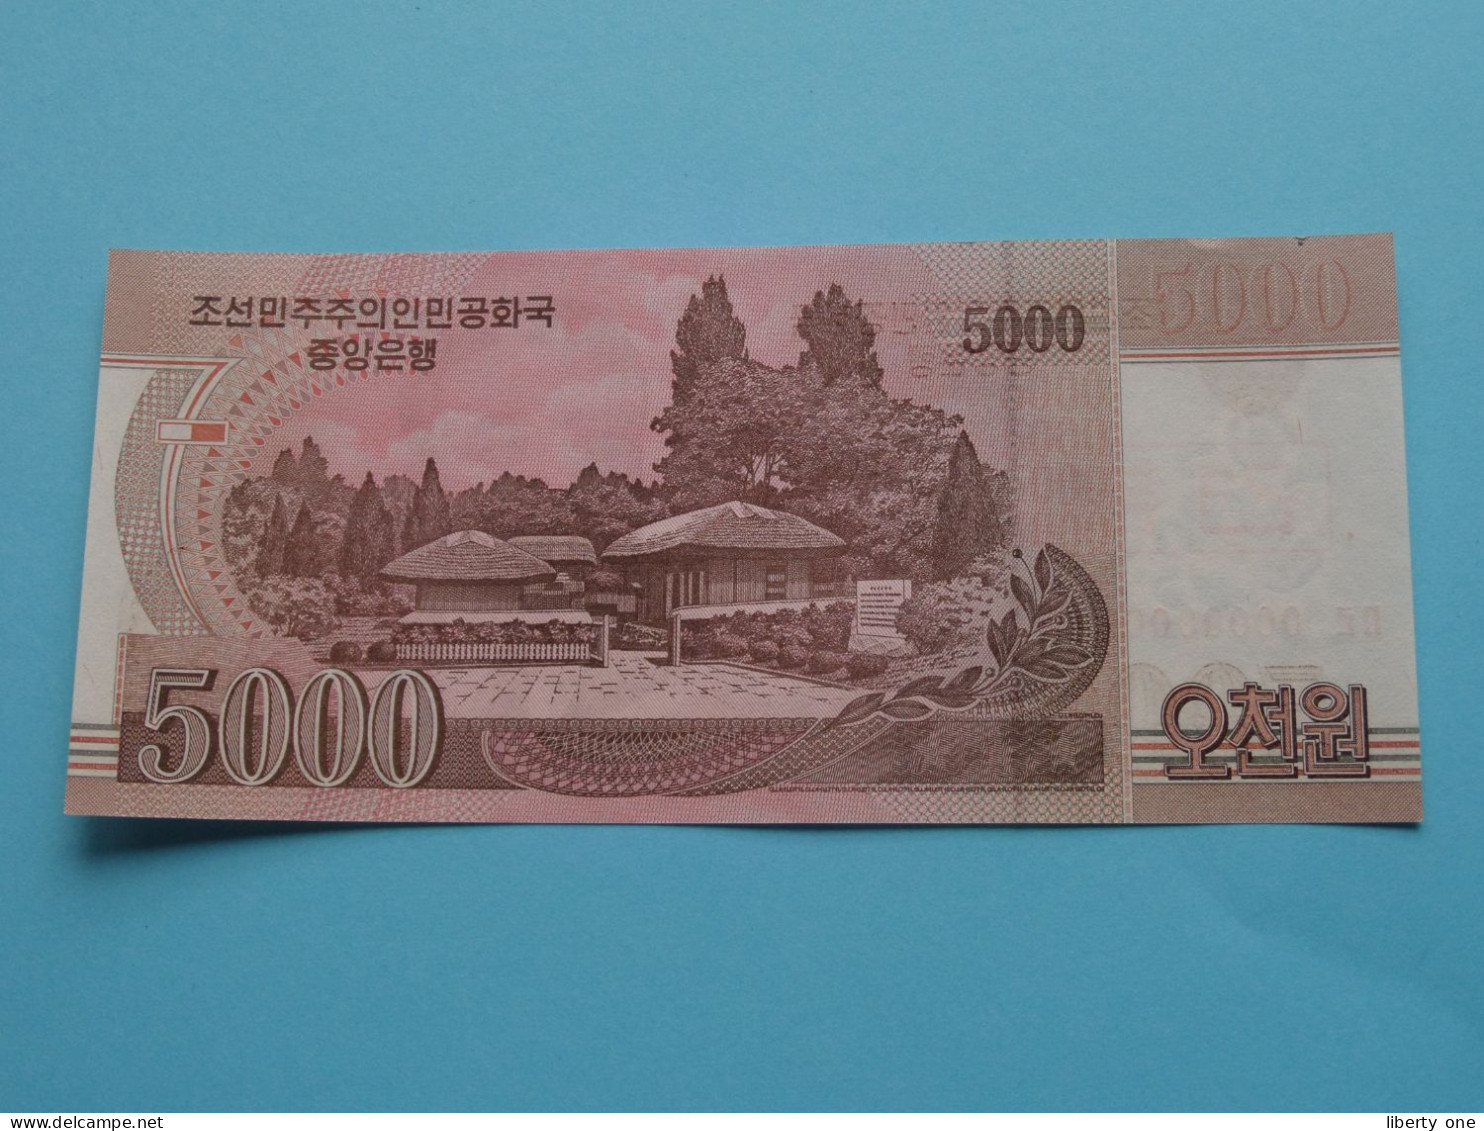 5000 Won - 2008 > N° 0000000 ( For Grade, Please See Photo ) UNC > North Korea ! - Corea Del Norte